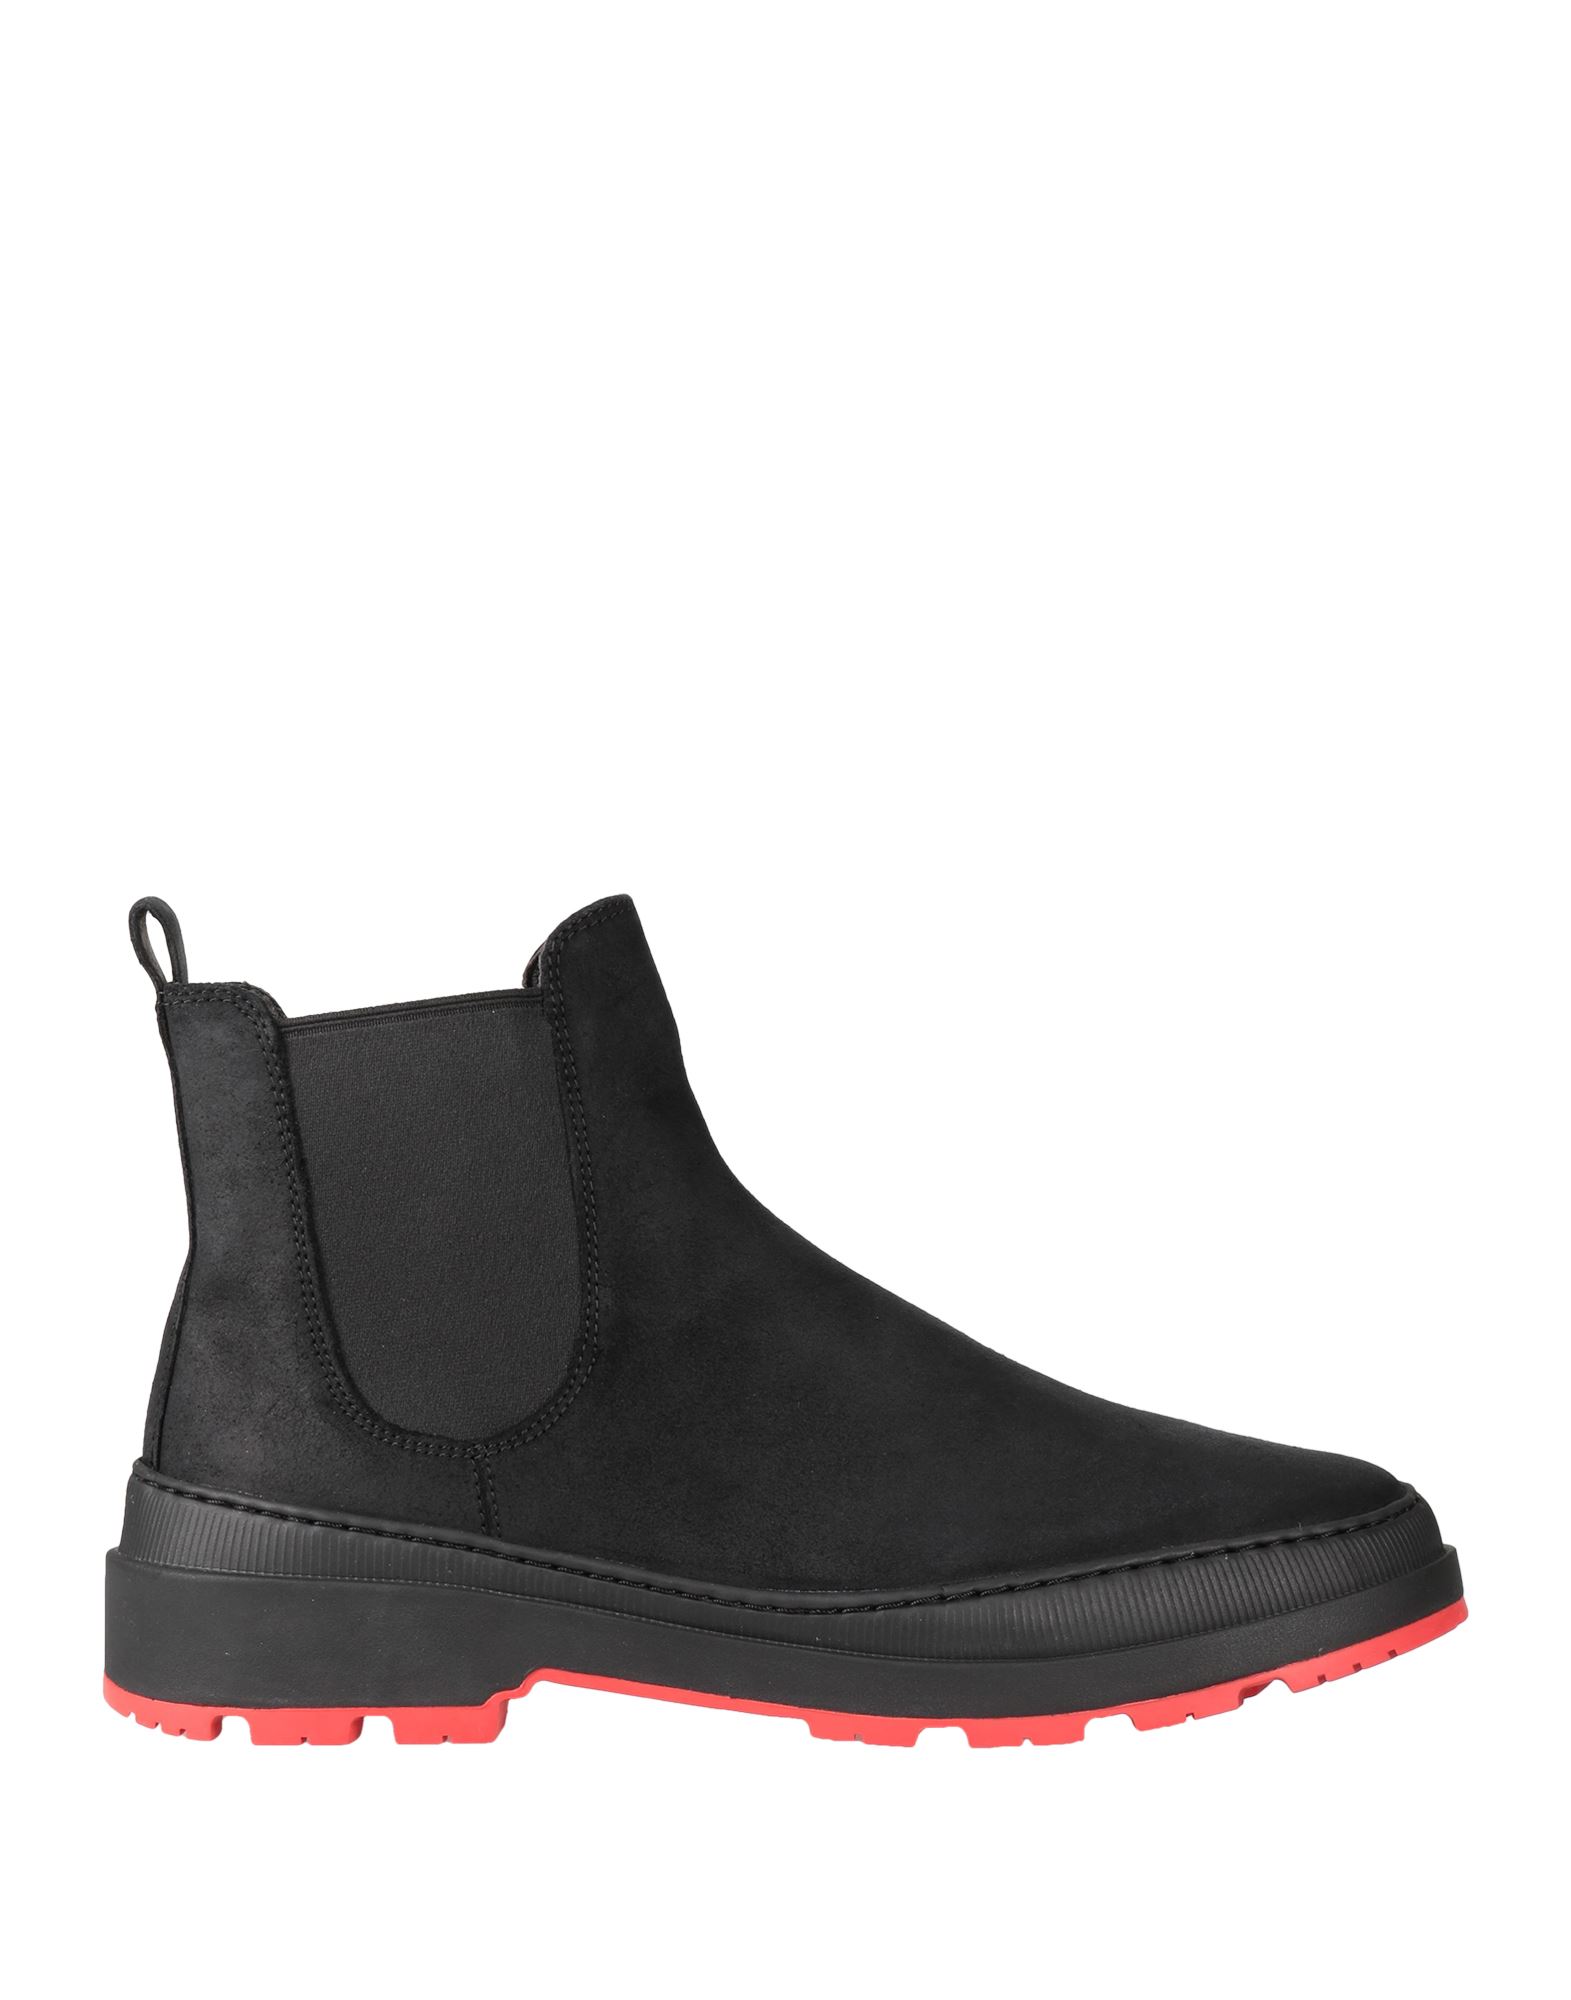 Shop Camper Man Ankle Boots Black Size 7 Soft Leather